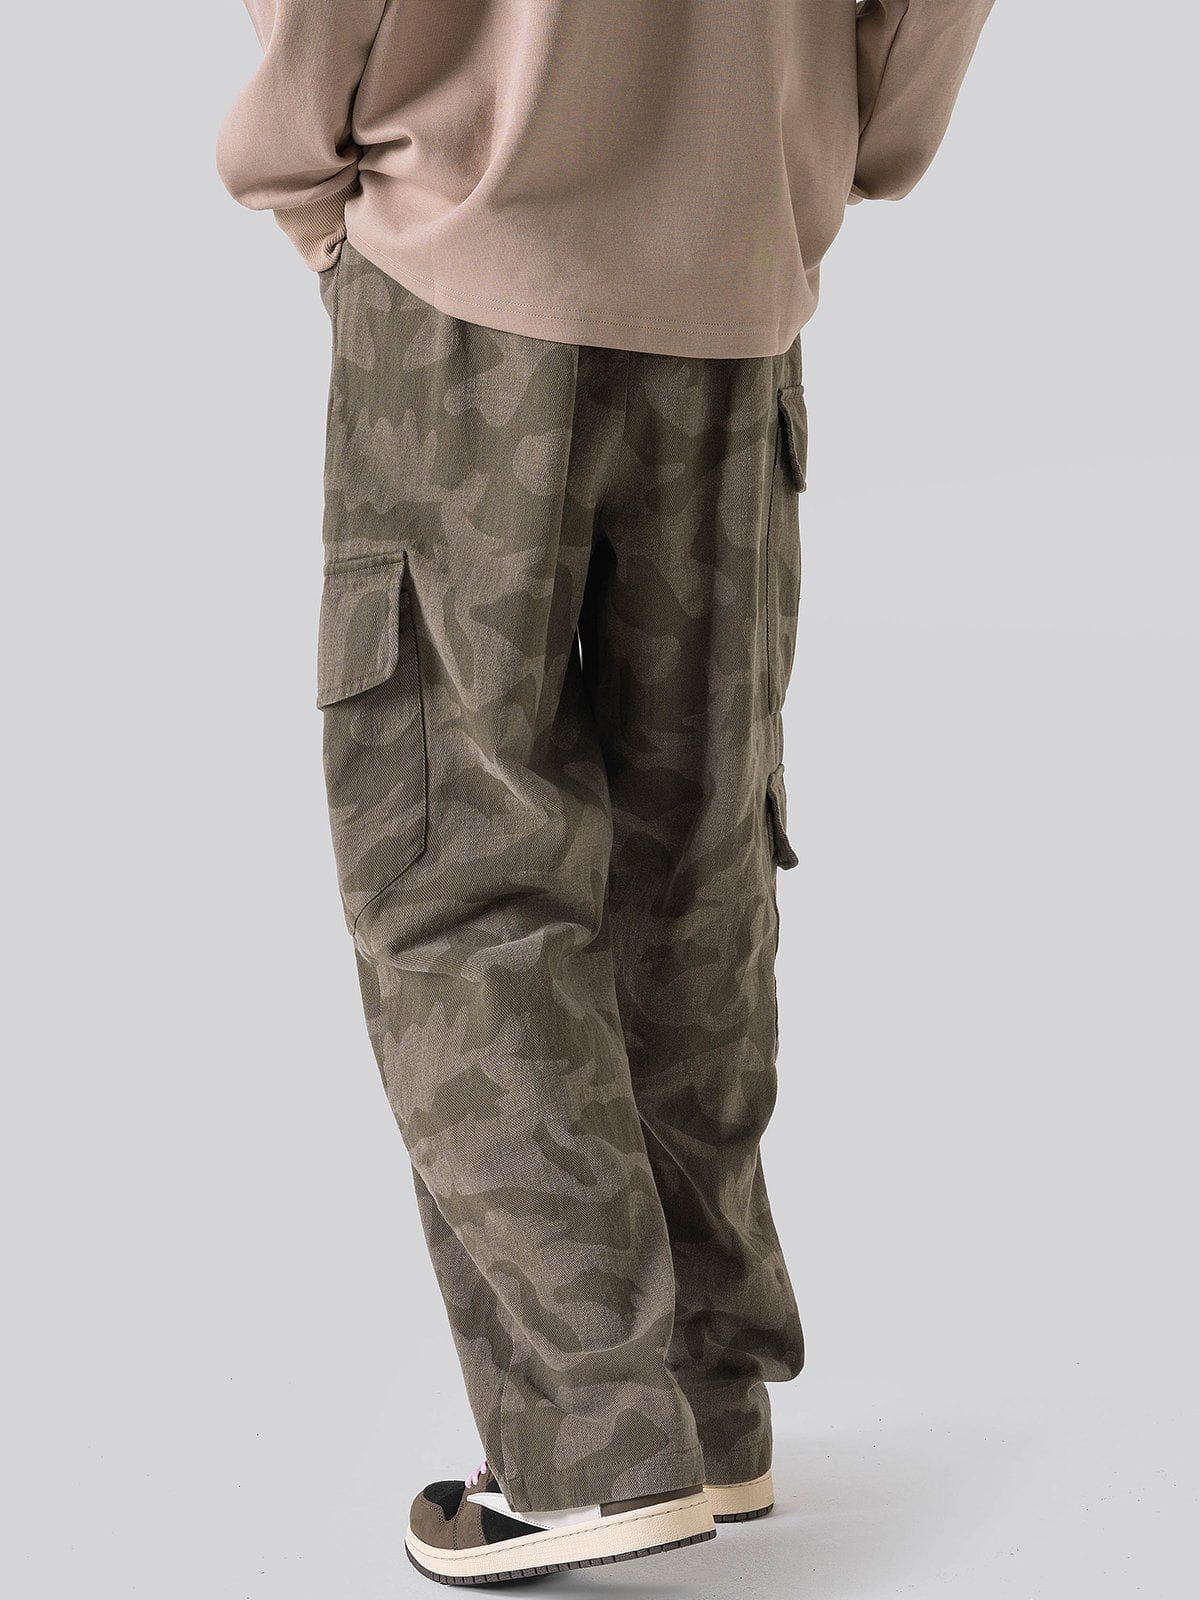 Sneakerland® - Large Multi-Pocket Cargo Pants